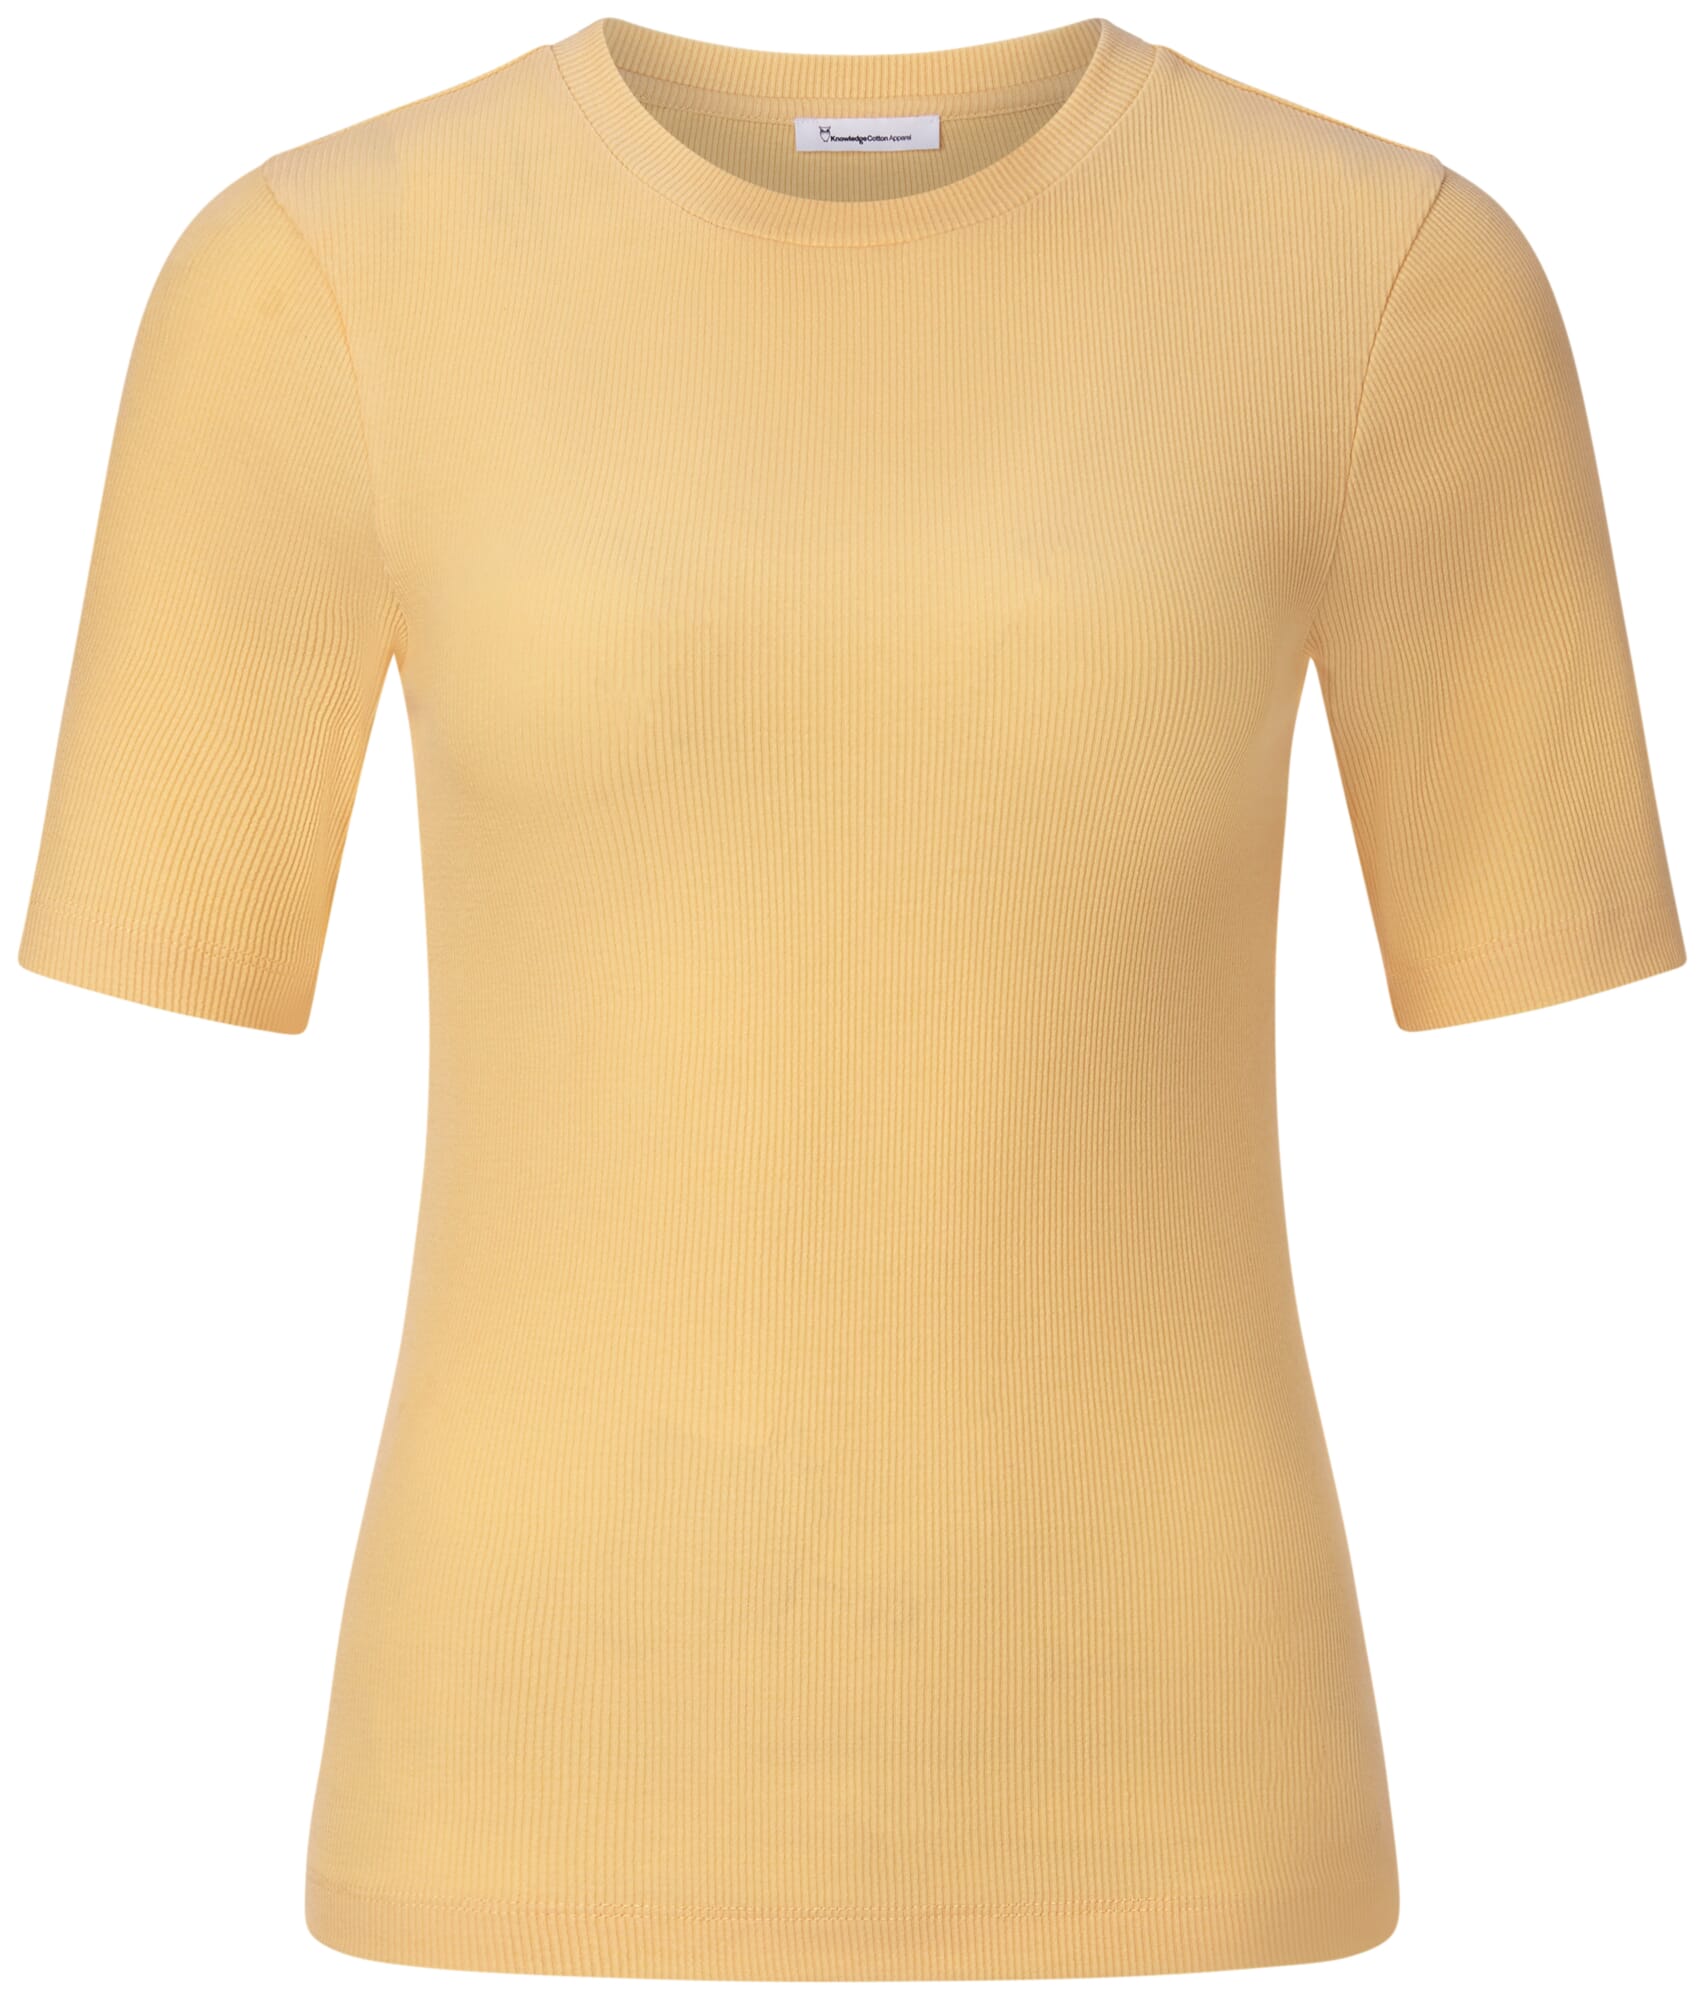 Ladies' ribbed T-shirt, Yellow | Manufactum